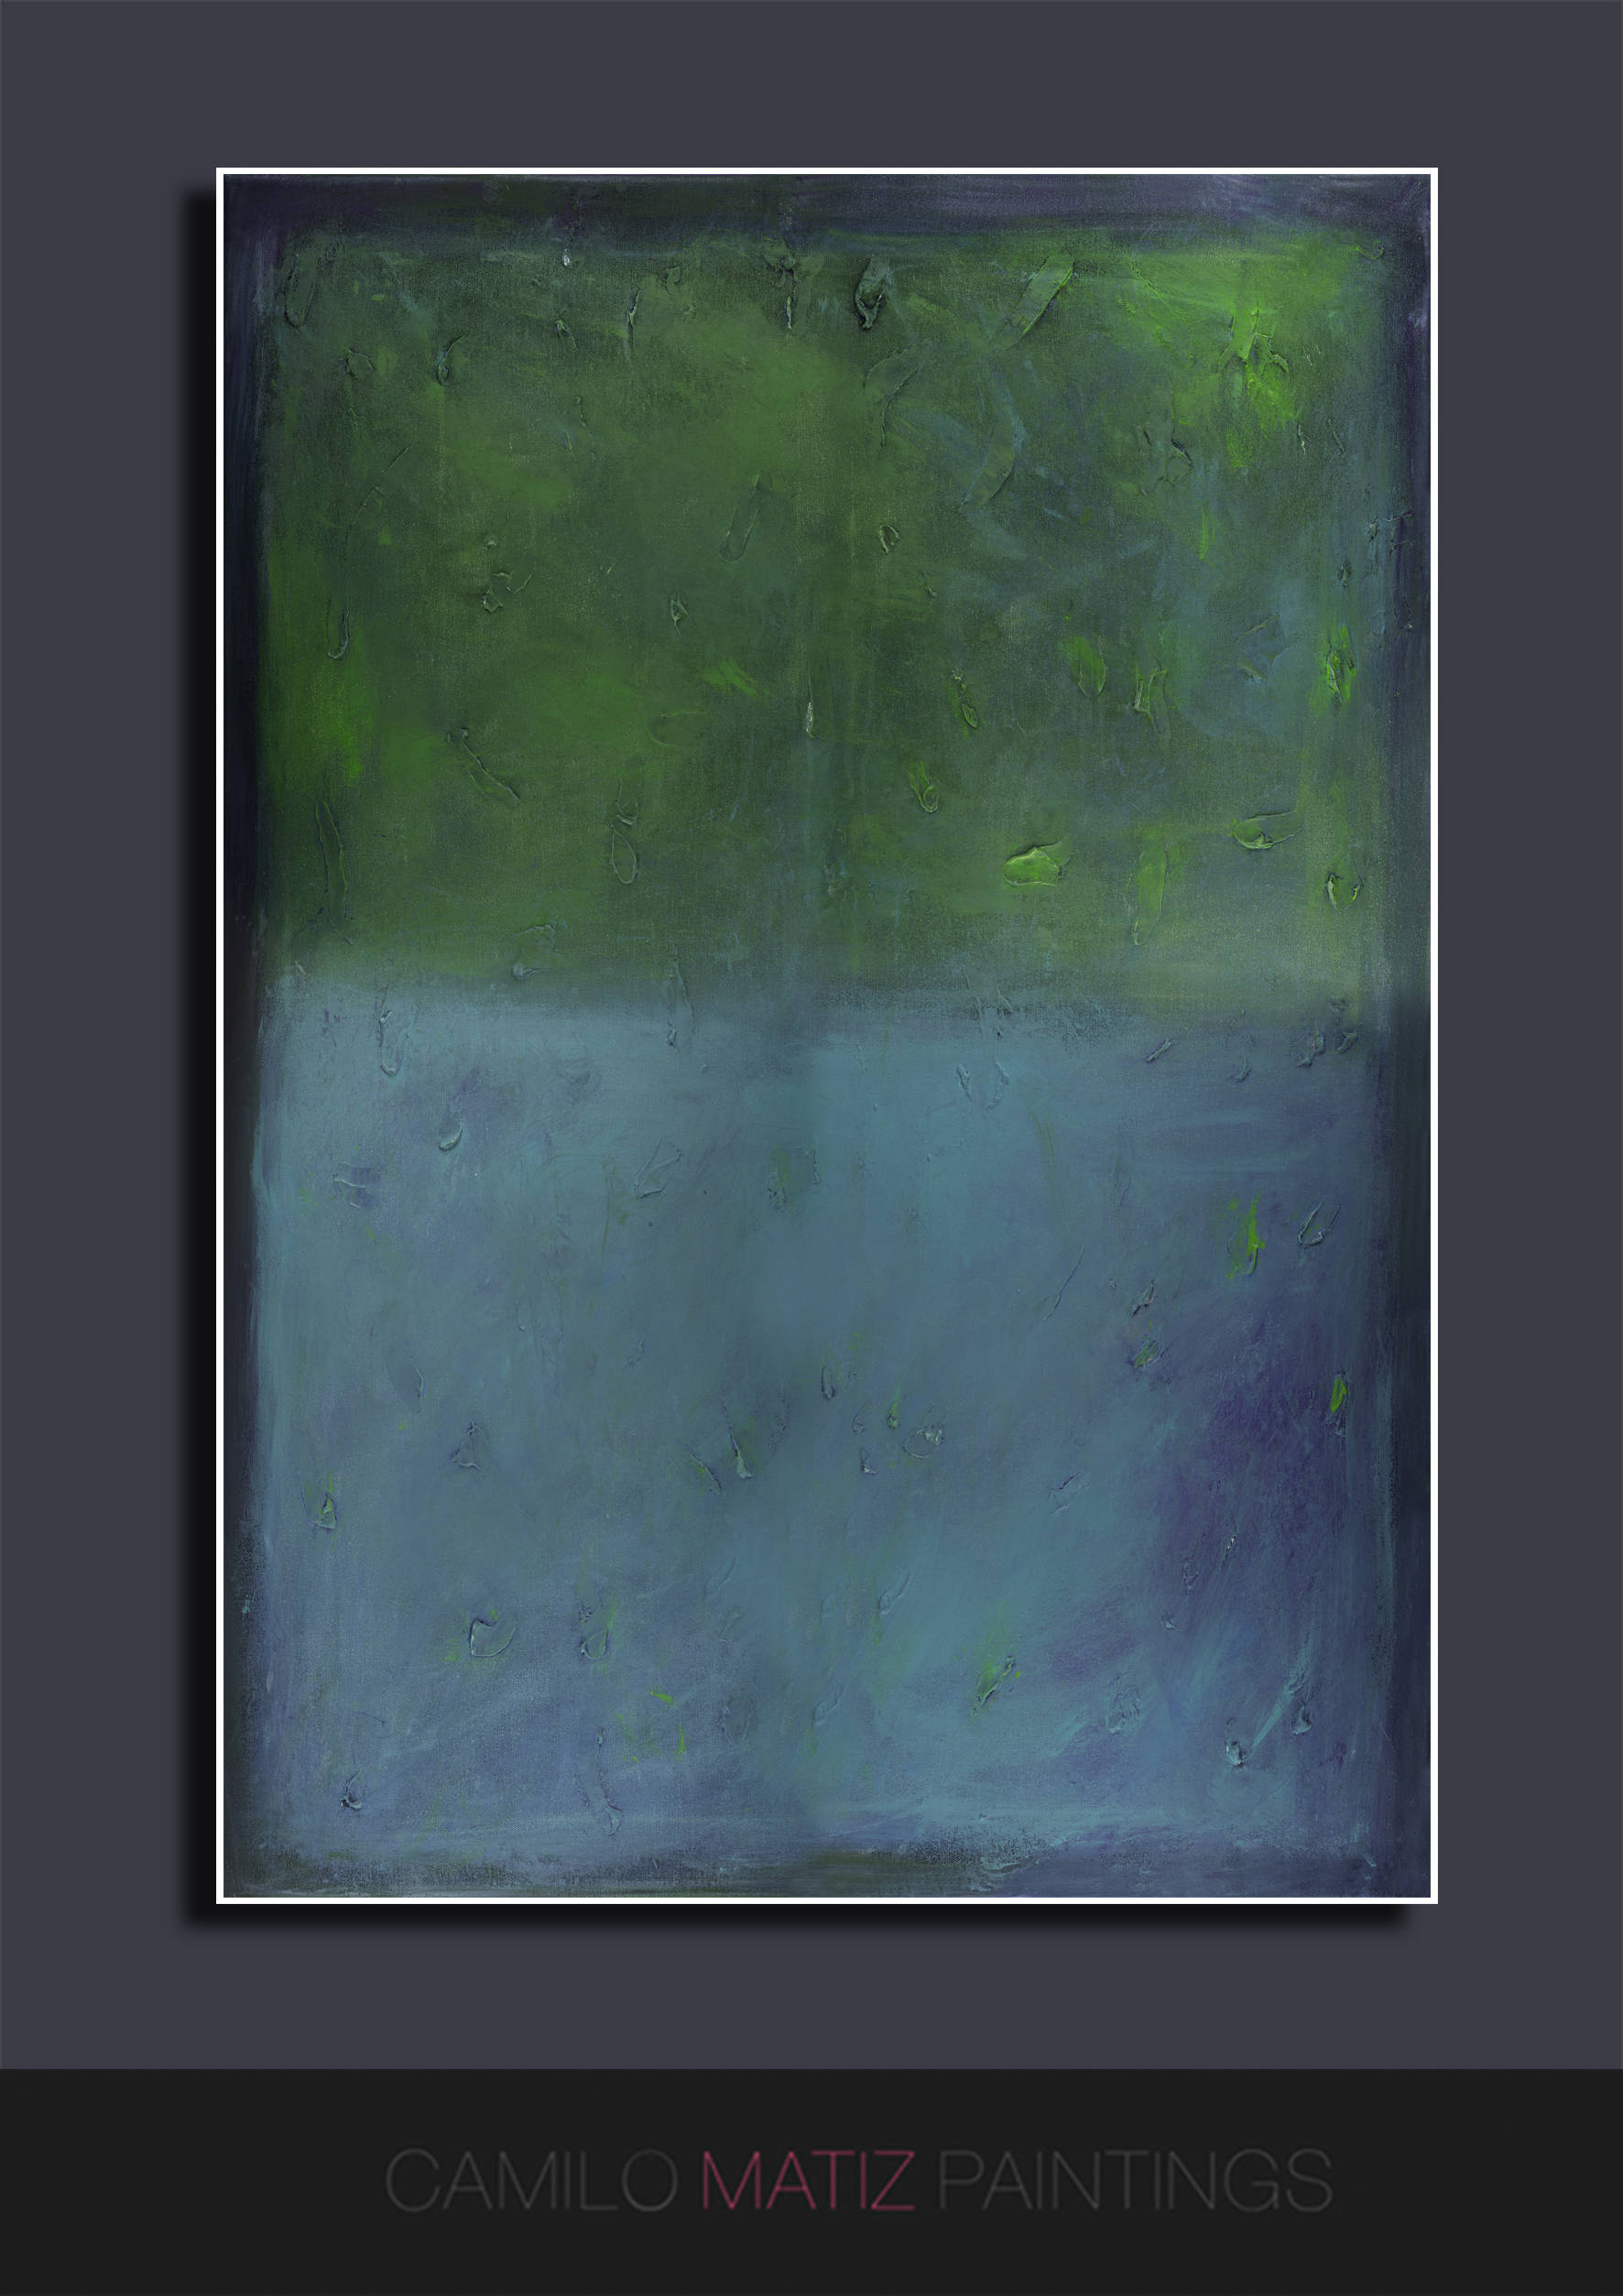 Large wall art giclee print, green blue geometric abstract painting, large abstract painting print, giclee wall art - camilomattis.com